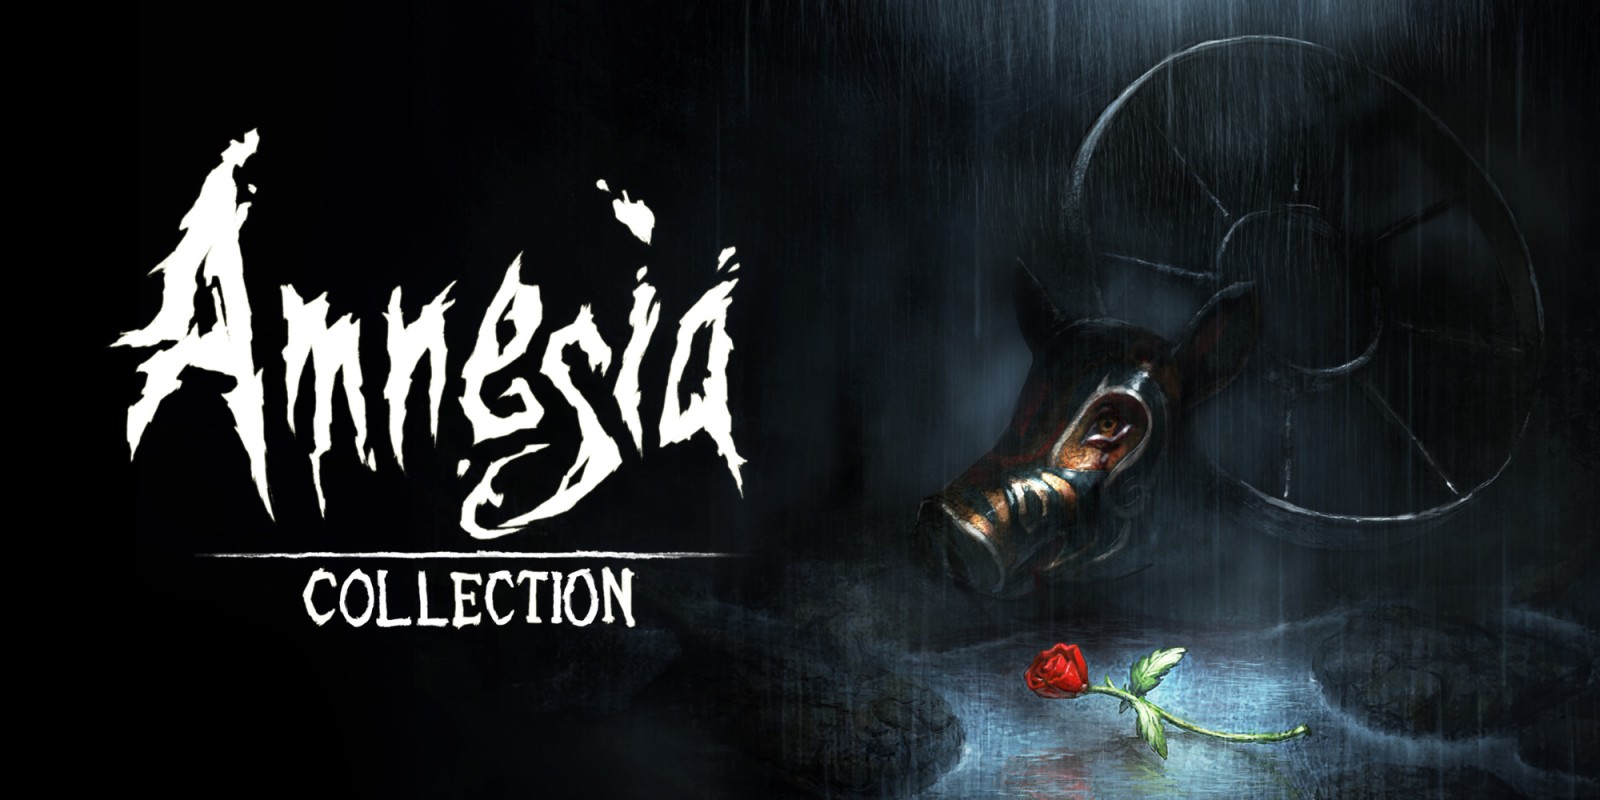 amnesia for nintendo switch